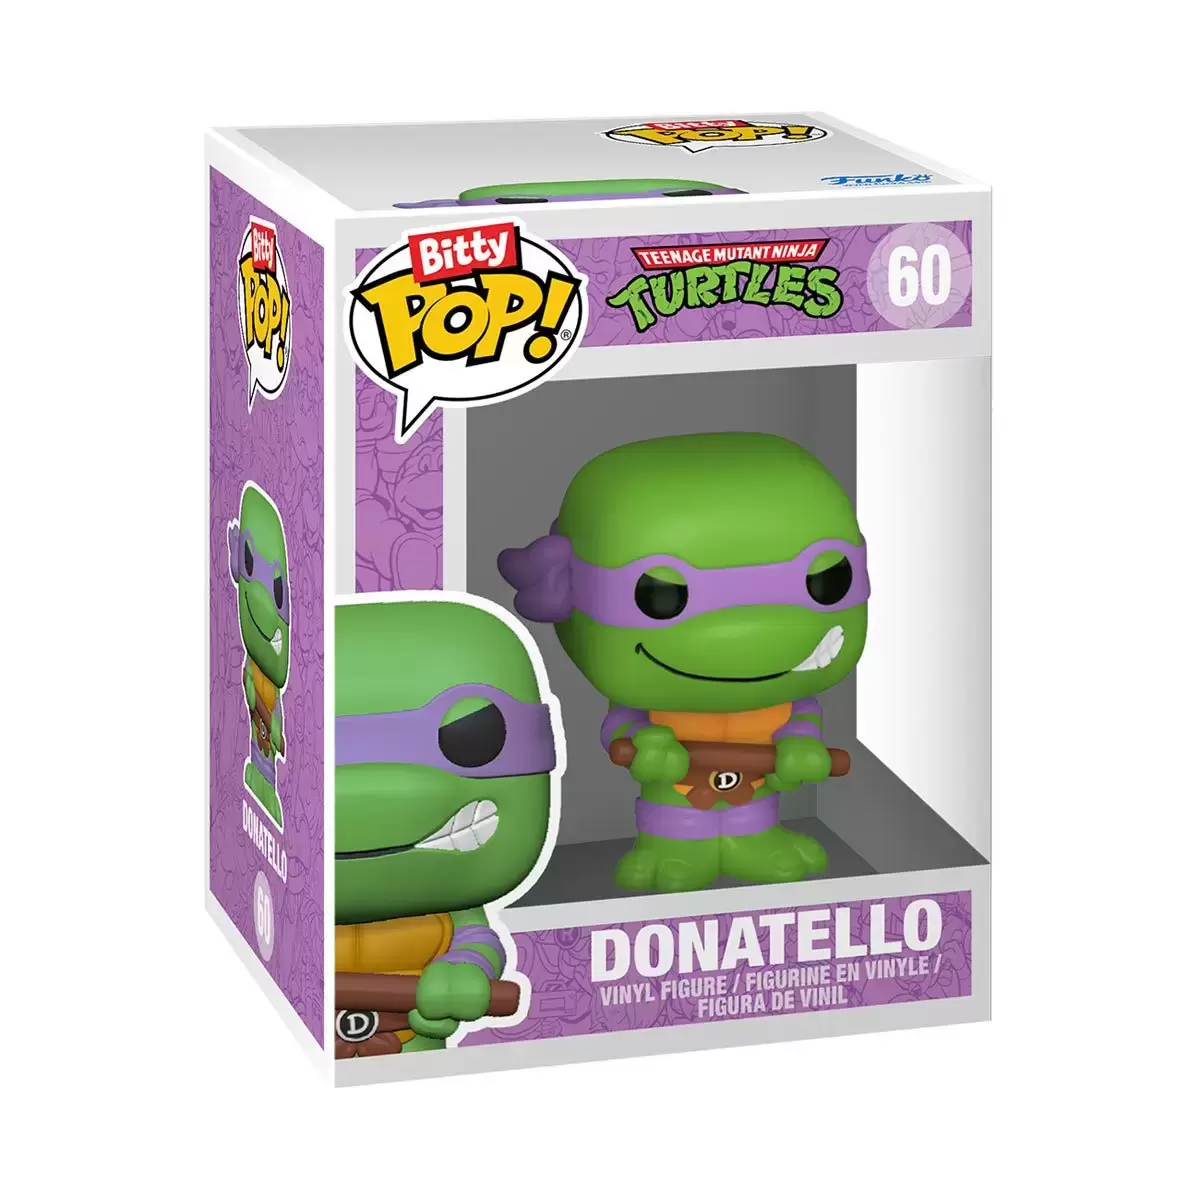 Bitty POP! - Teenage Mutant Ninja Turtles - Donatello